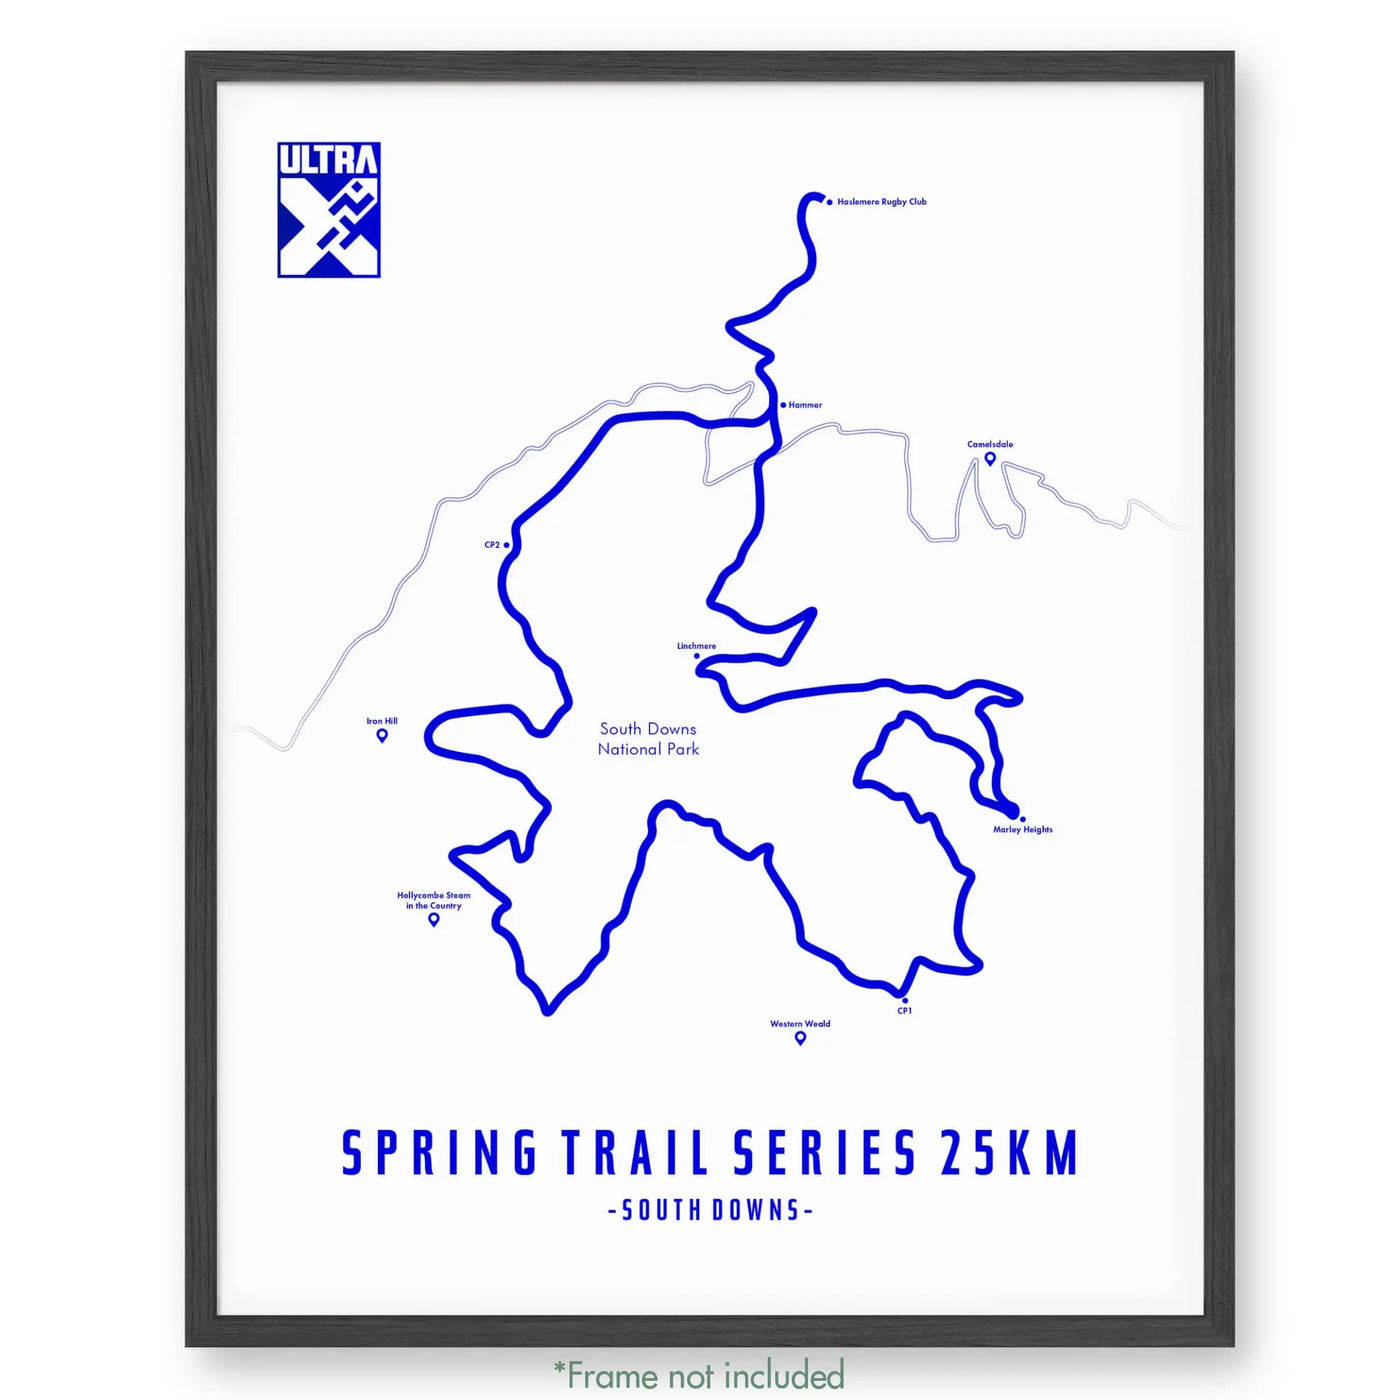 Trail Poster of Ultra X Spring Trail Series 25km - Ultra X